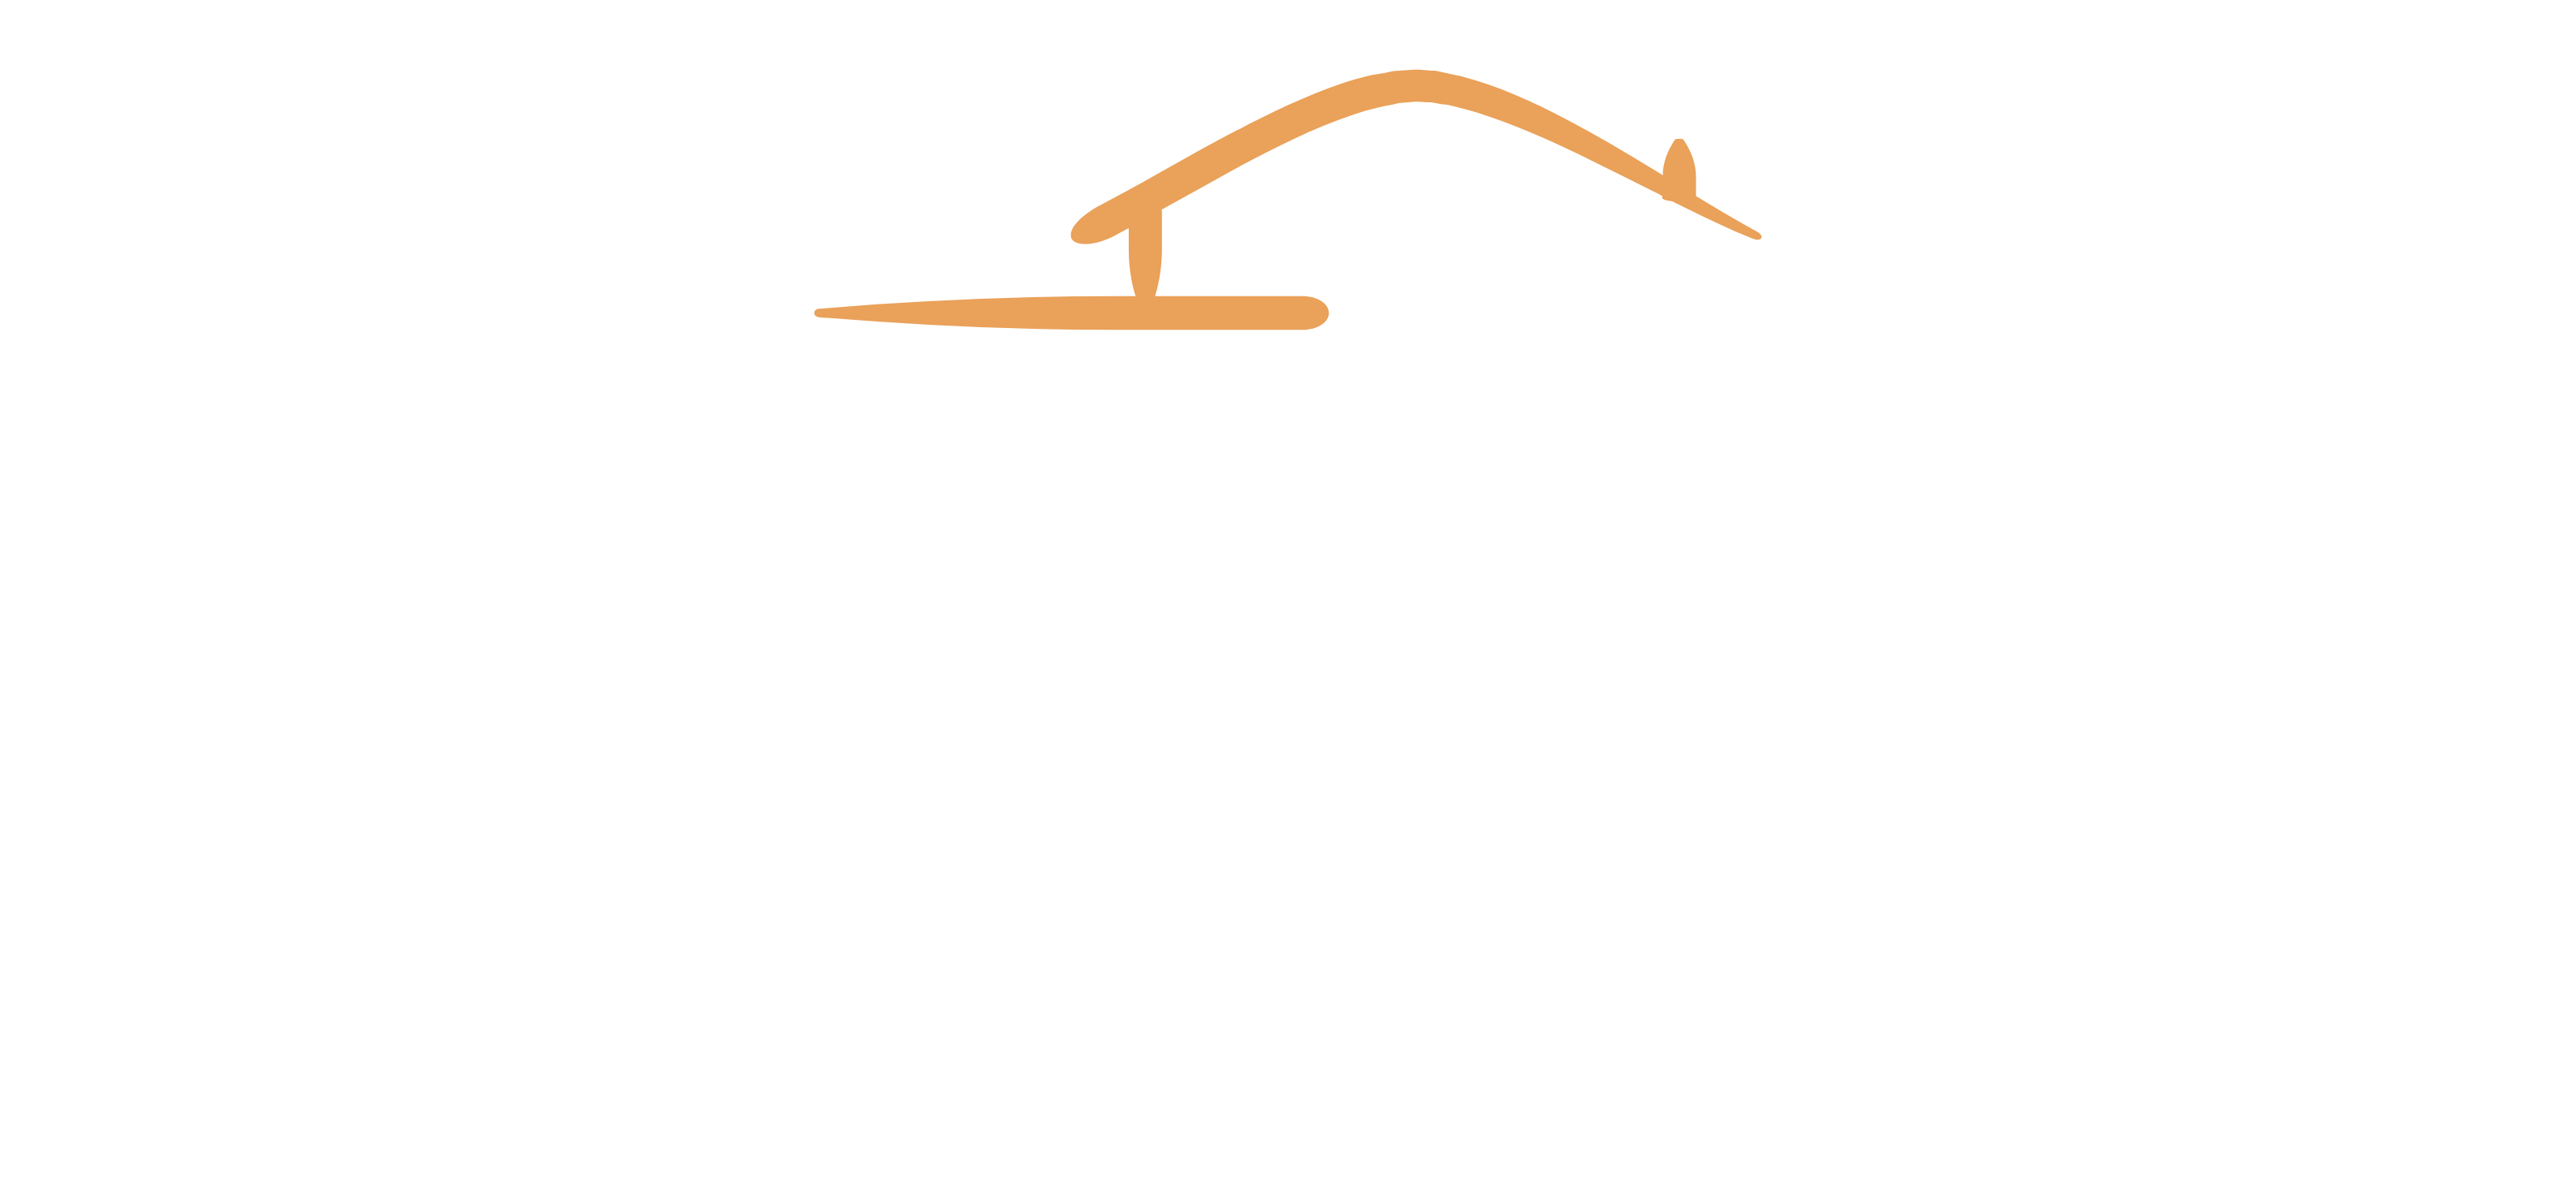 Eutopia Properties | Real Estate Investment Opportunities in Crete